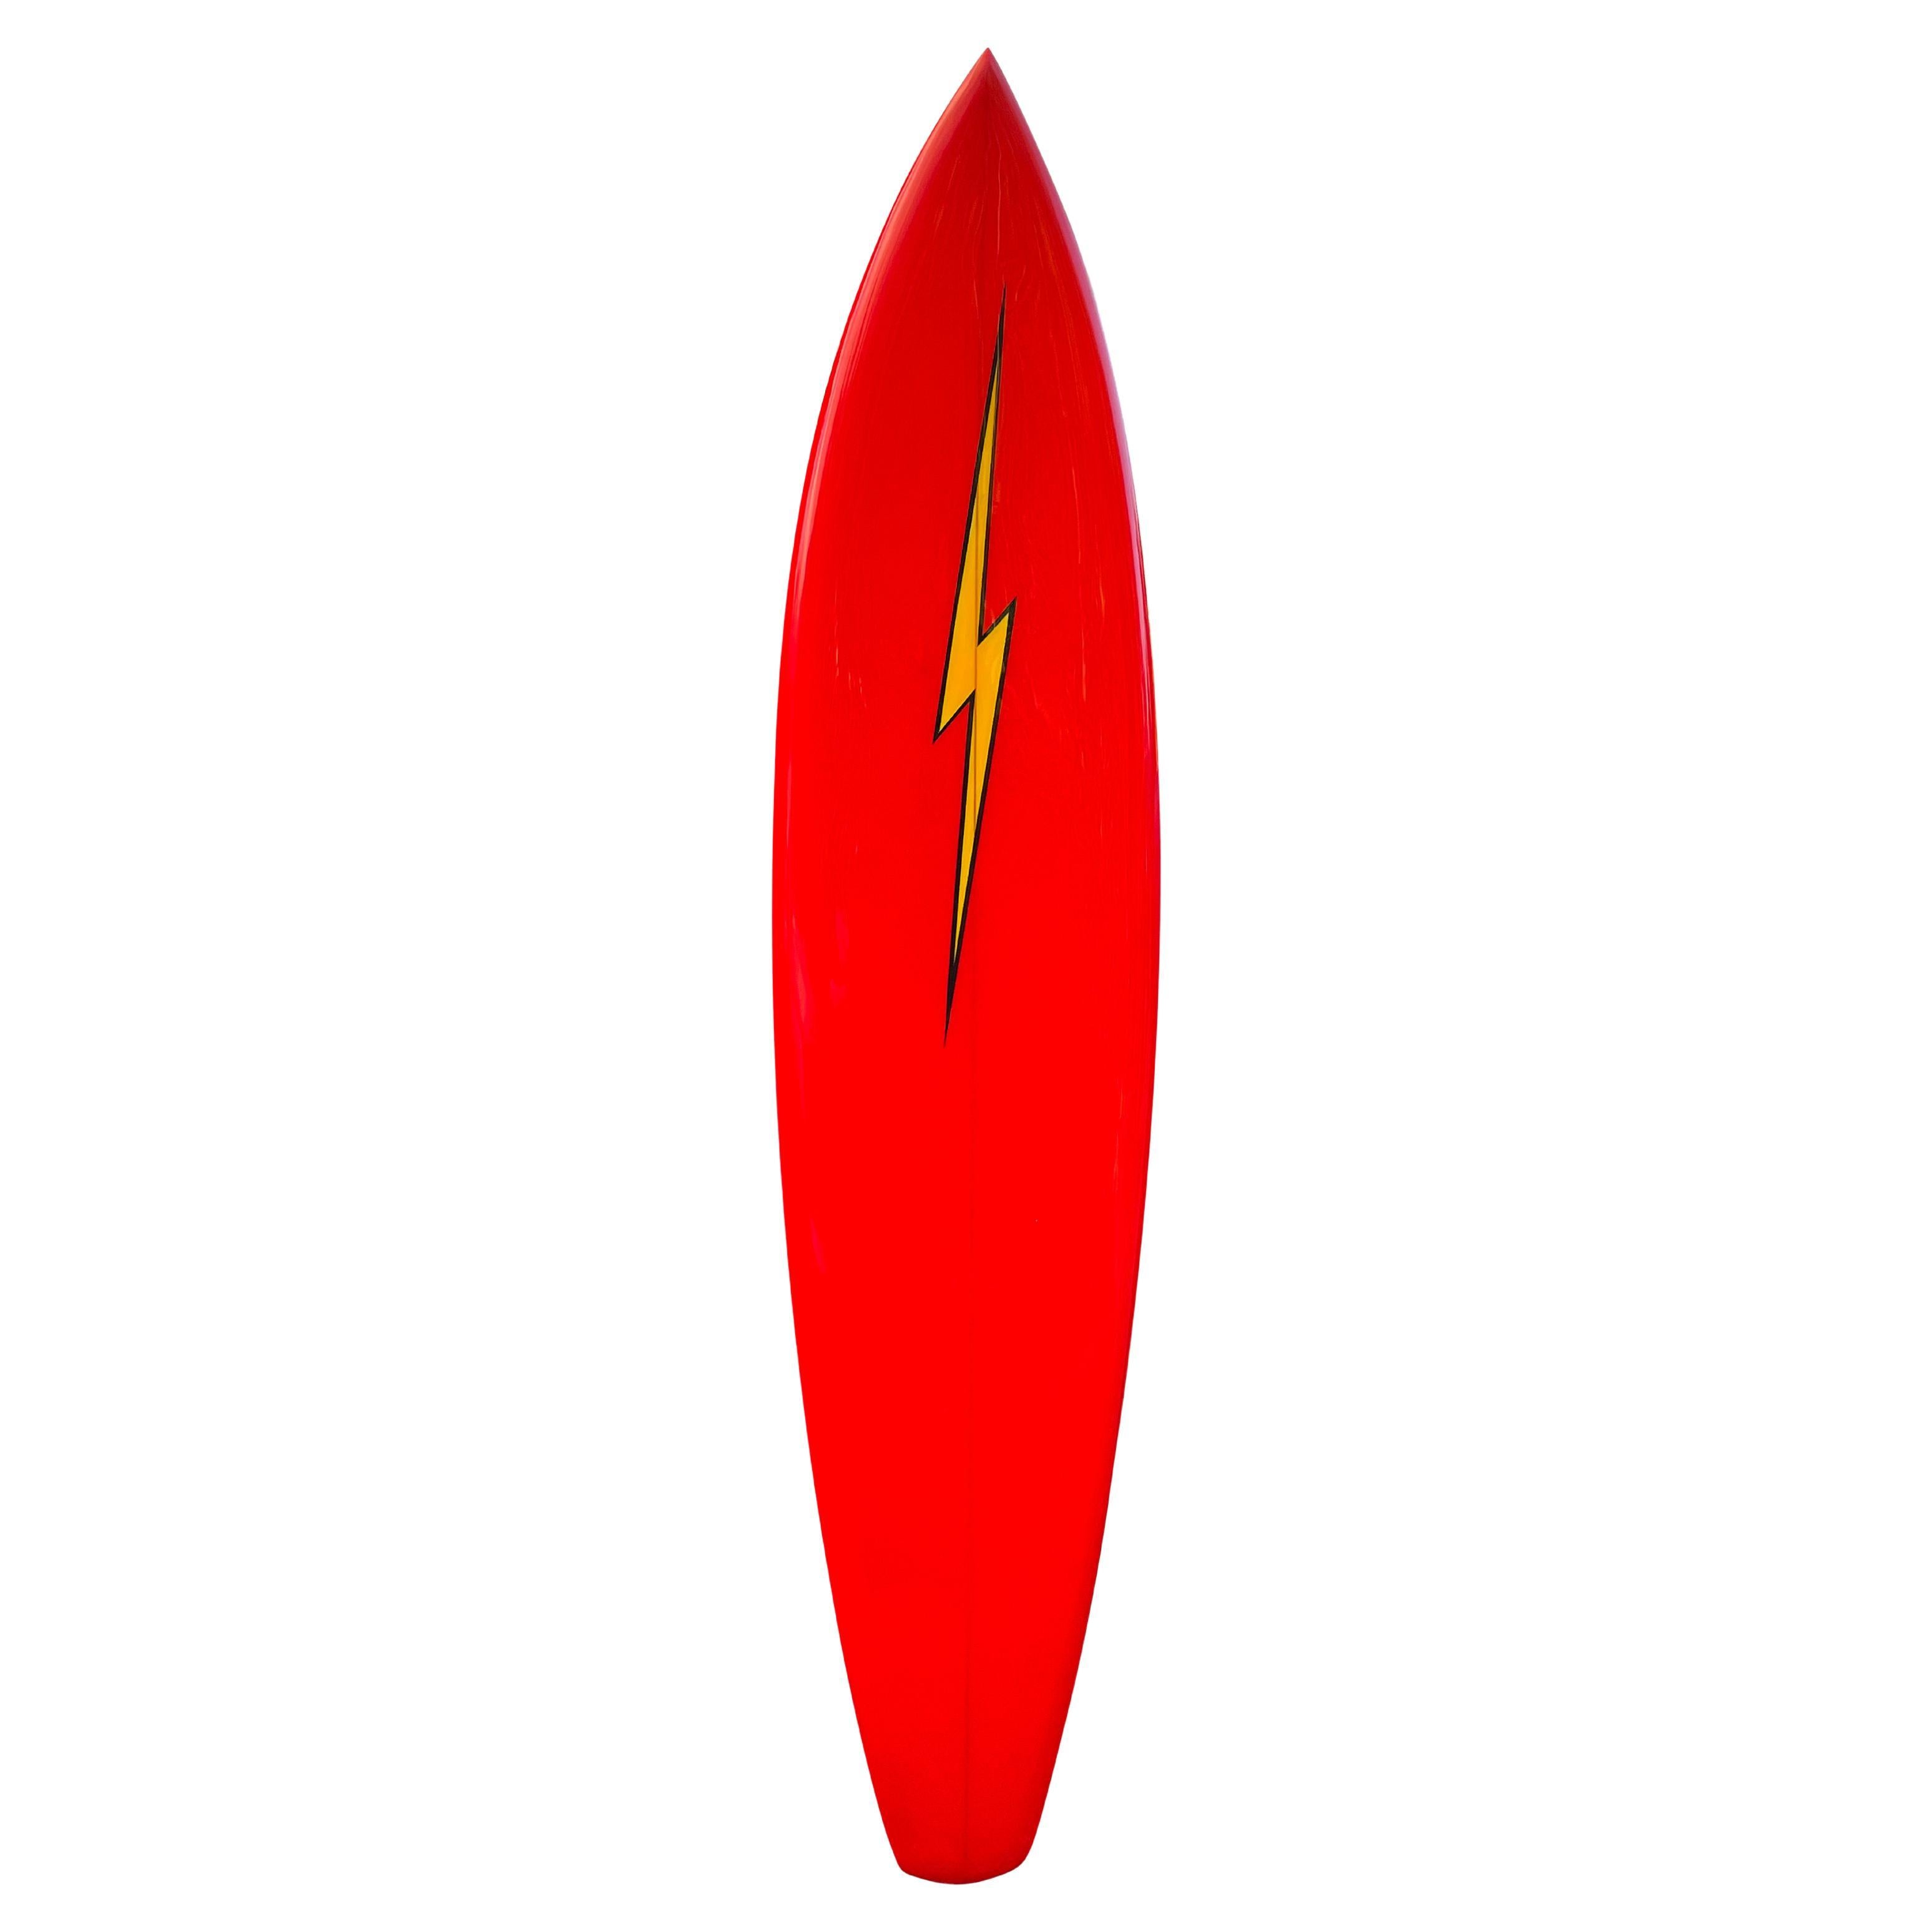 1970s Vintage Lightning Bolt surfboard shaped by Gerry Lopez